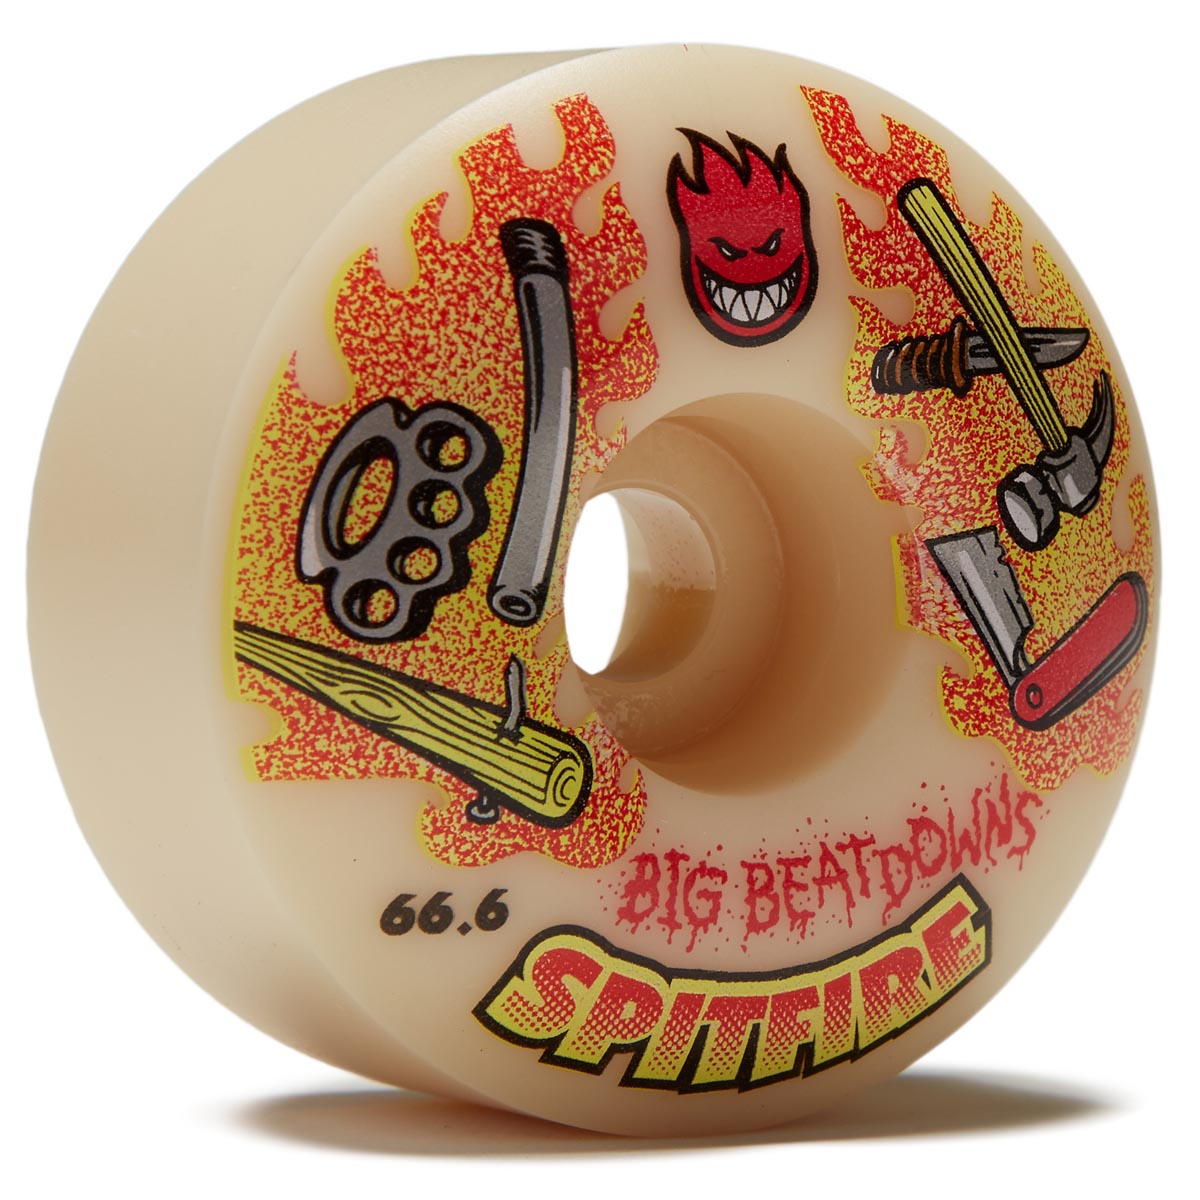 Spitfire F4 99 Big Beatdowns Classics Skateboard Wheels - 66.6mm image 1